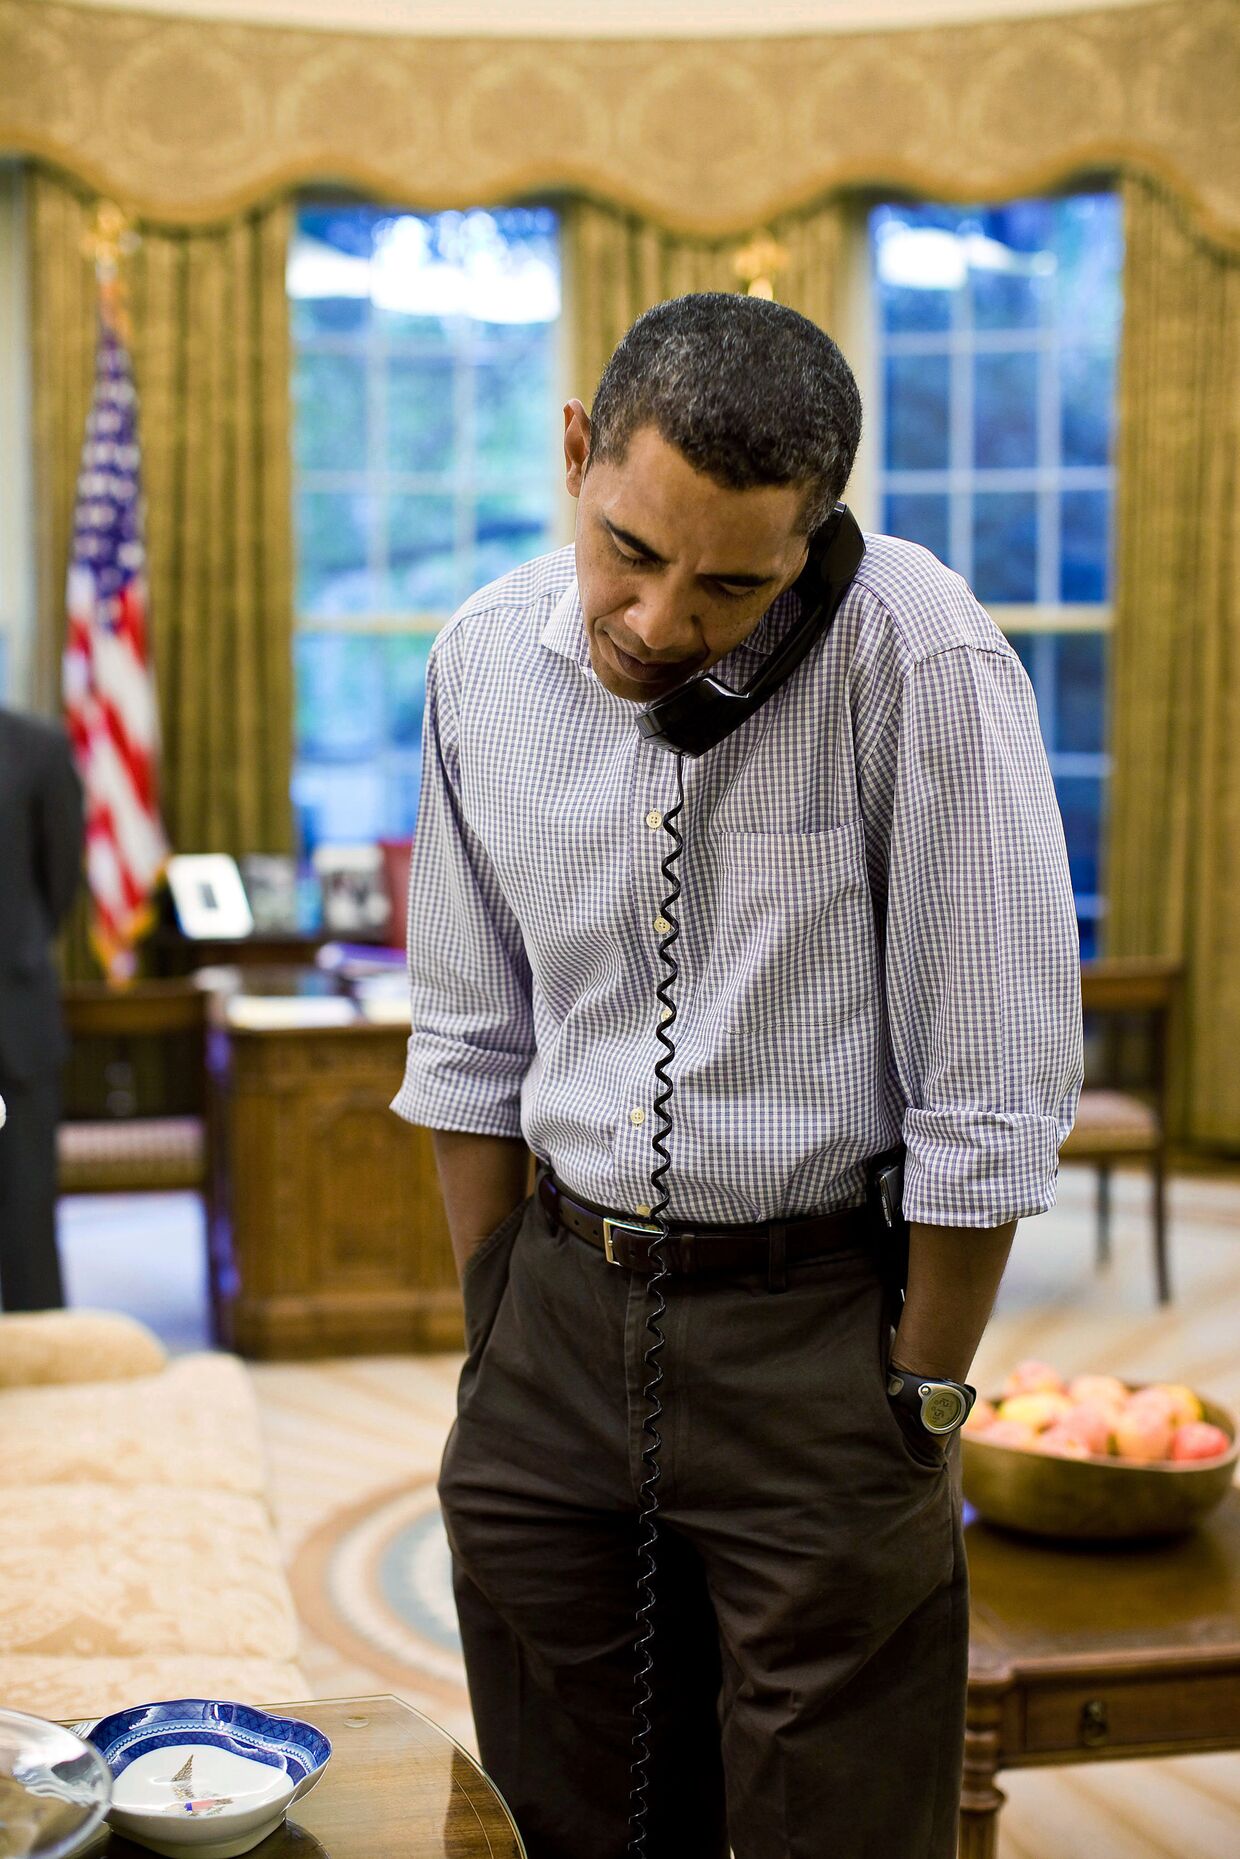 Президент США Барак Обама разговаривает по телефону